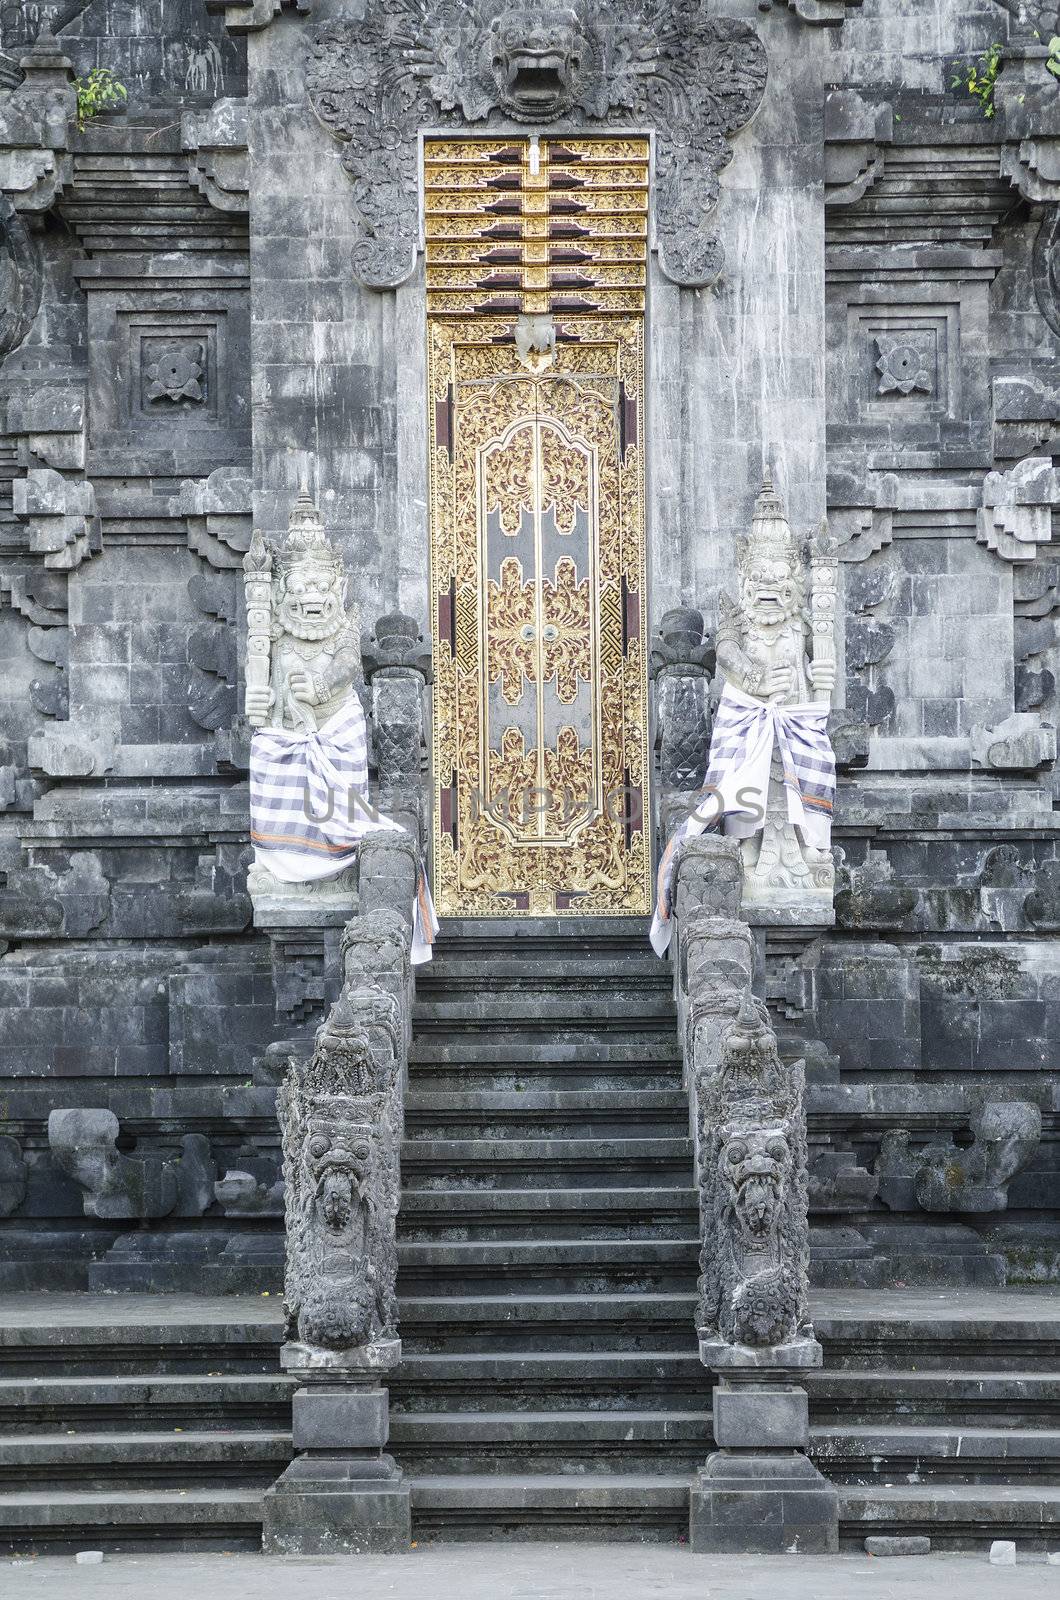 temple entrance door in bali indonesia